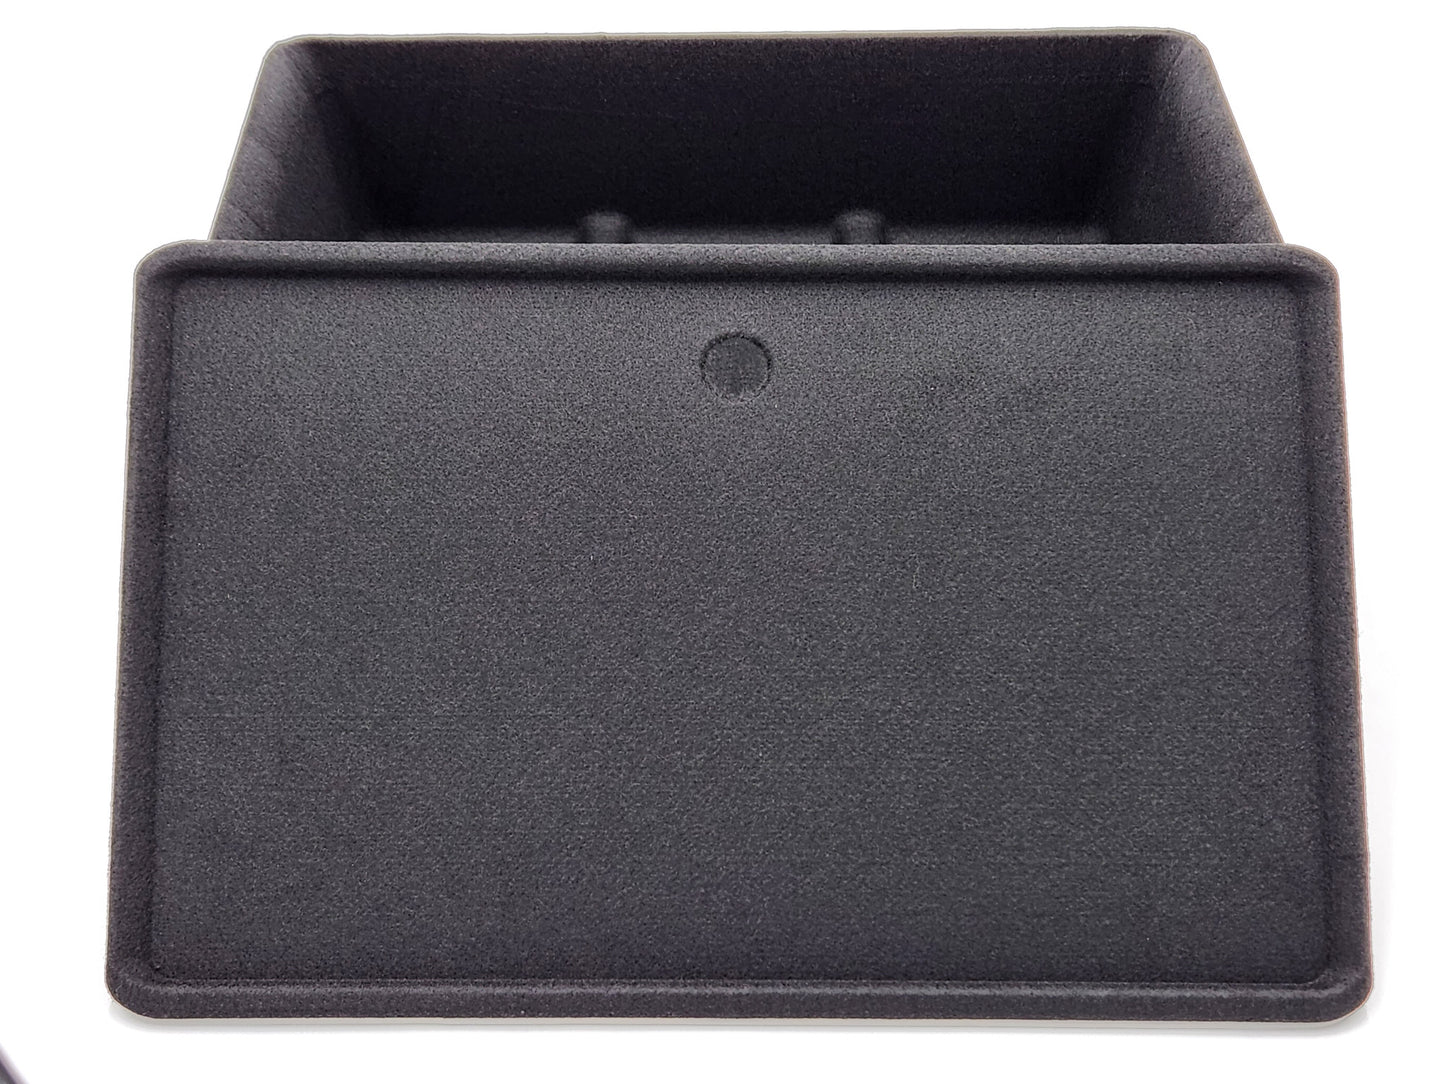 Model Y Under Seat Storage Box Organizer Tray Storage Box